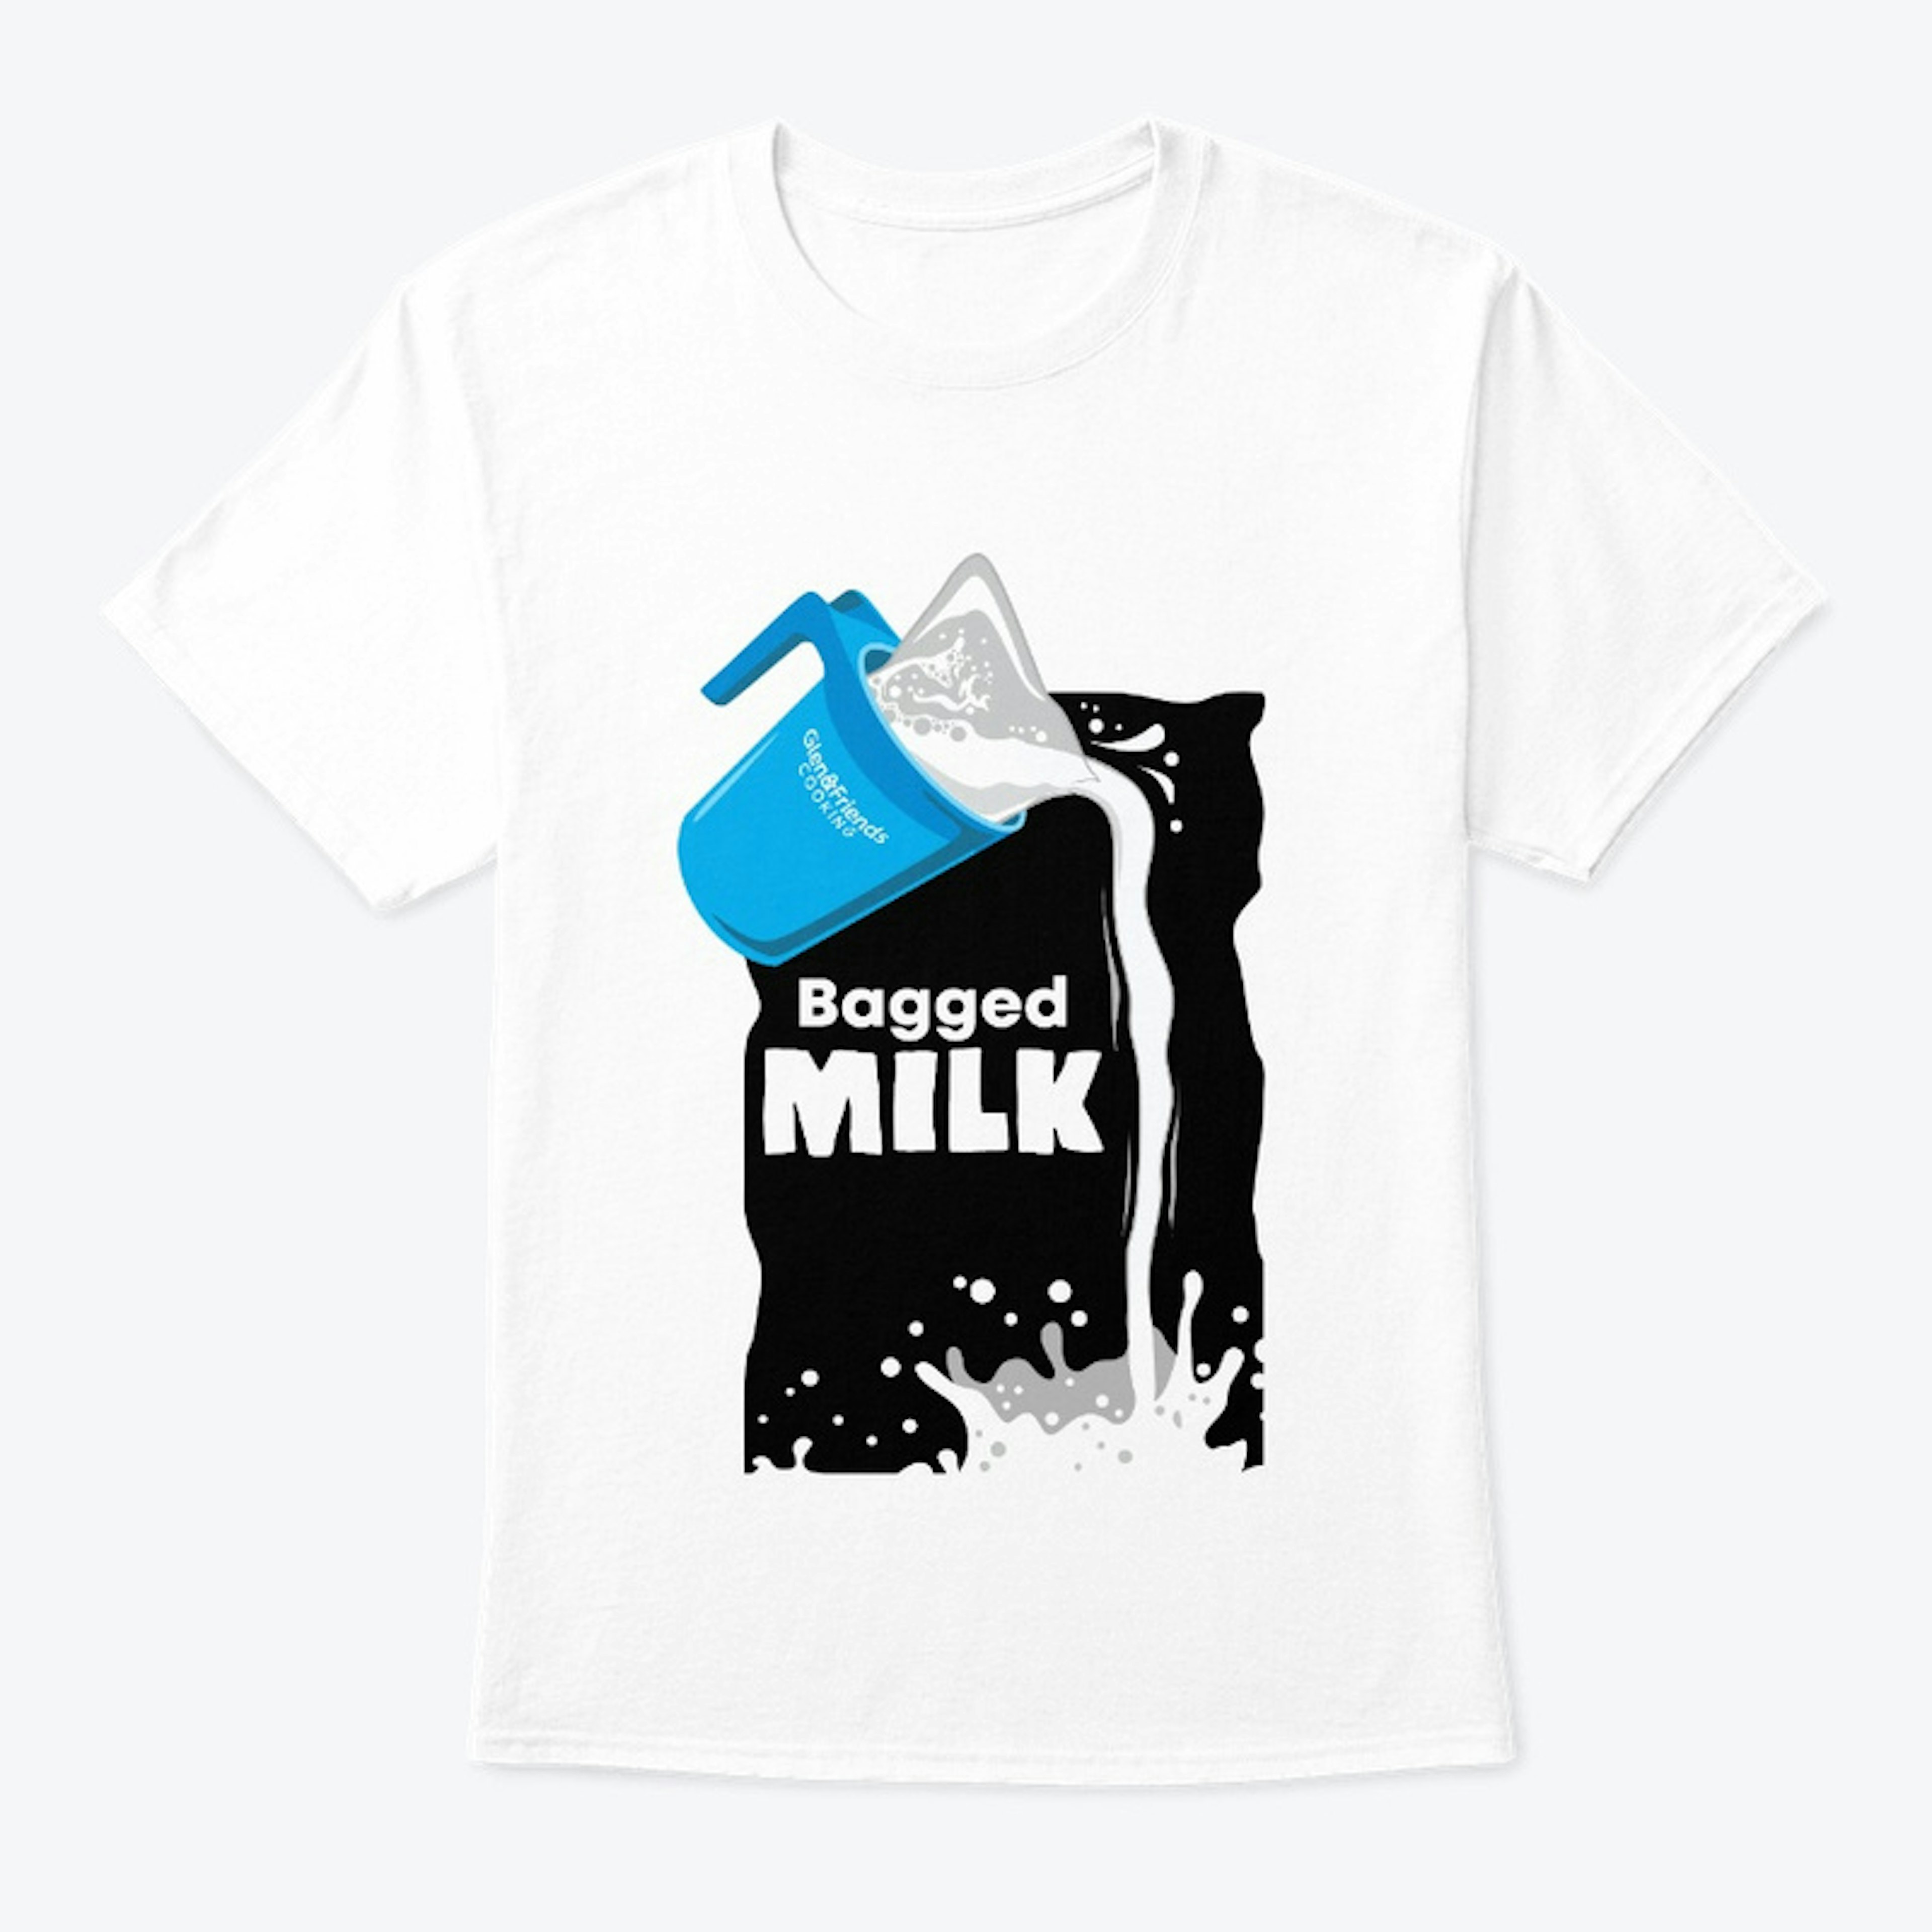 Bagged Milk #3